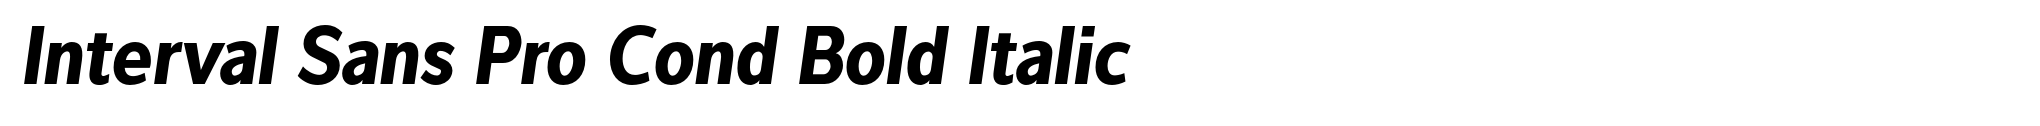 Interval Sans Pro Cond Bold Italic image